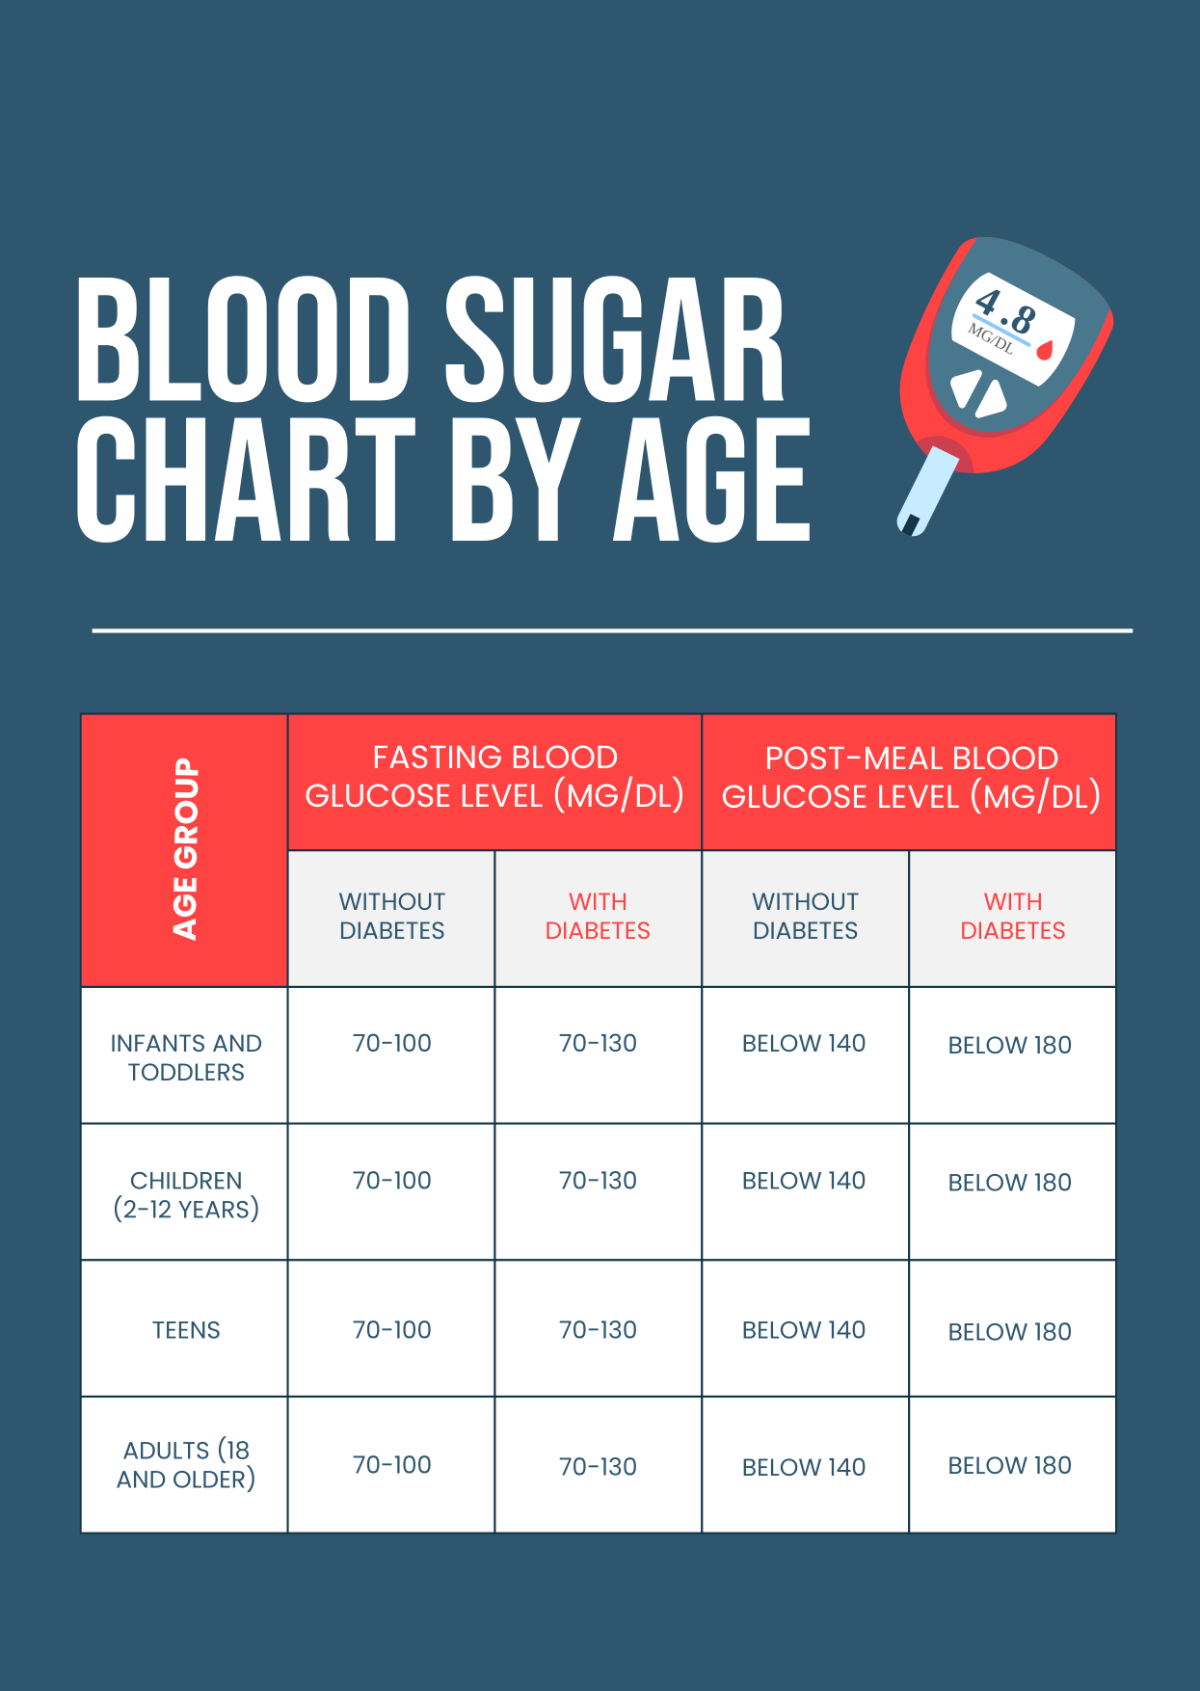 Blood Sugar Chart by Age